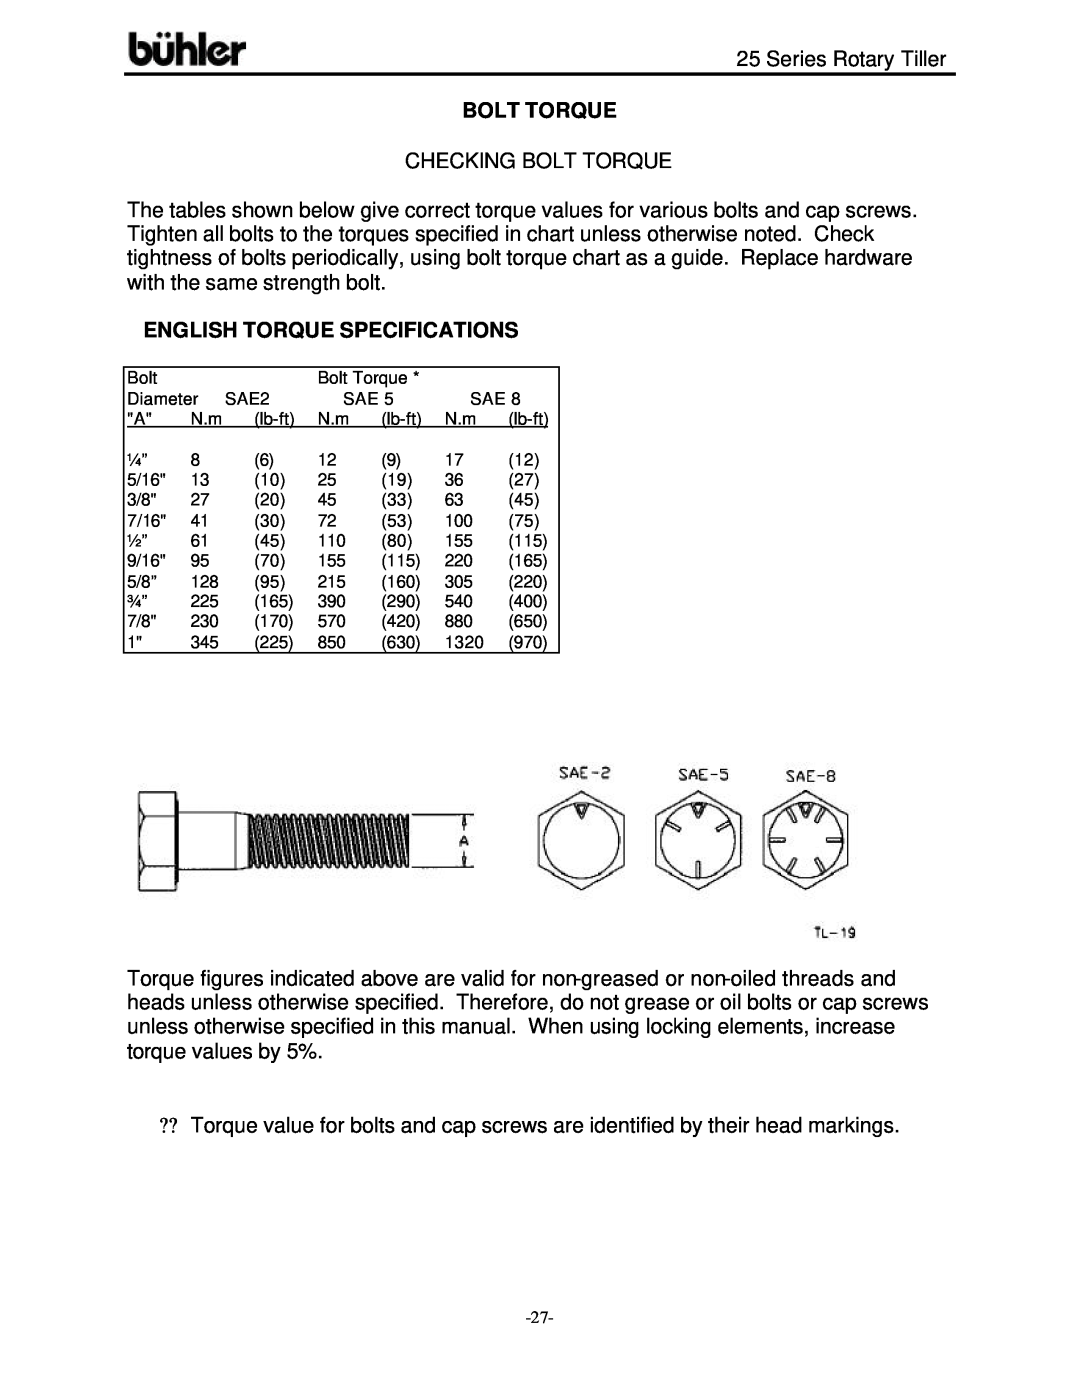 Buhler FK303 warranty Bolt Torque, English Torque Specifications 